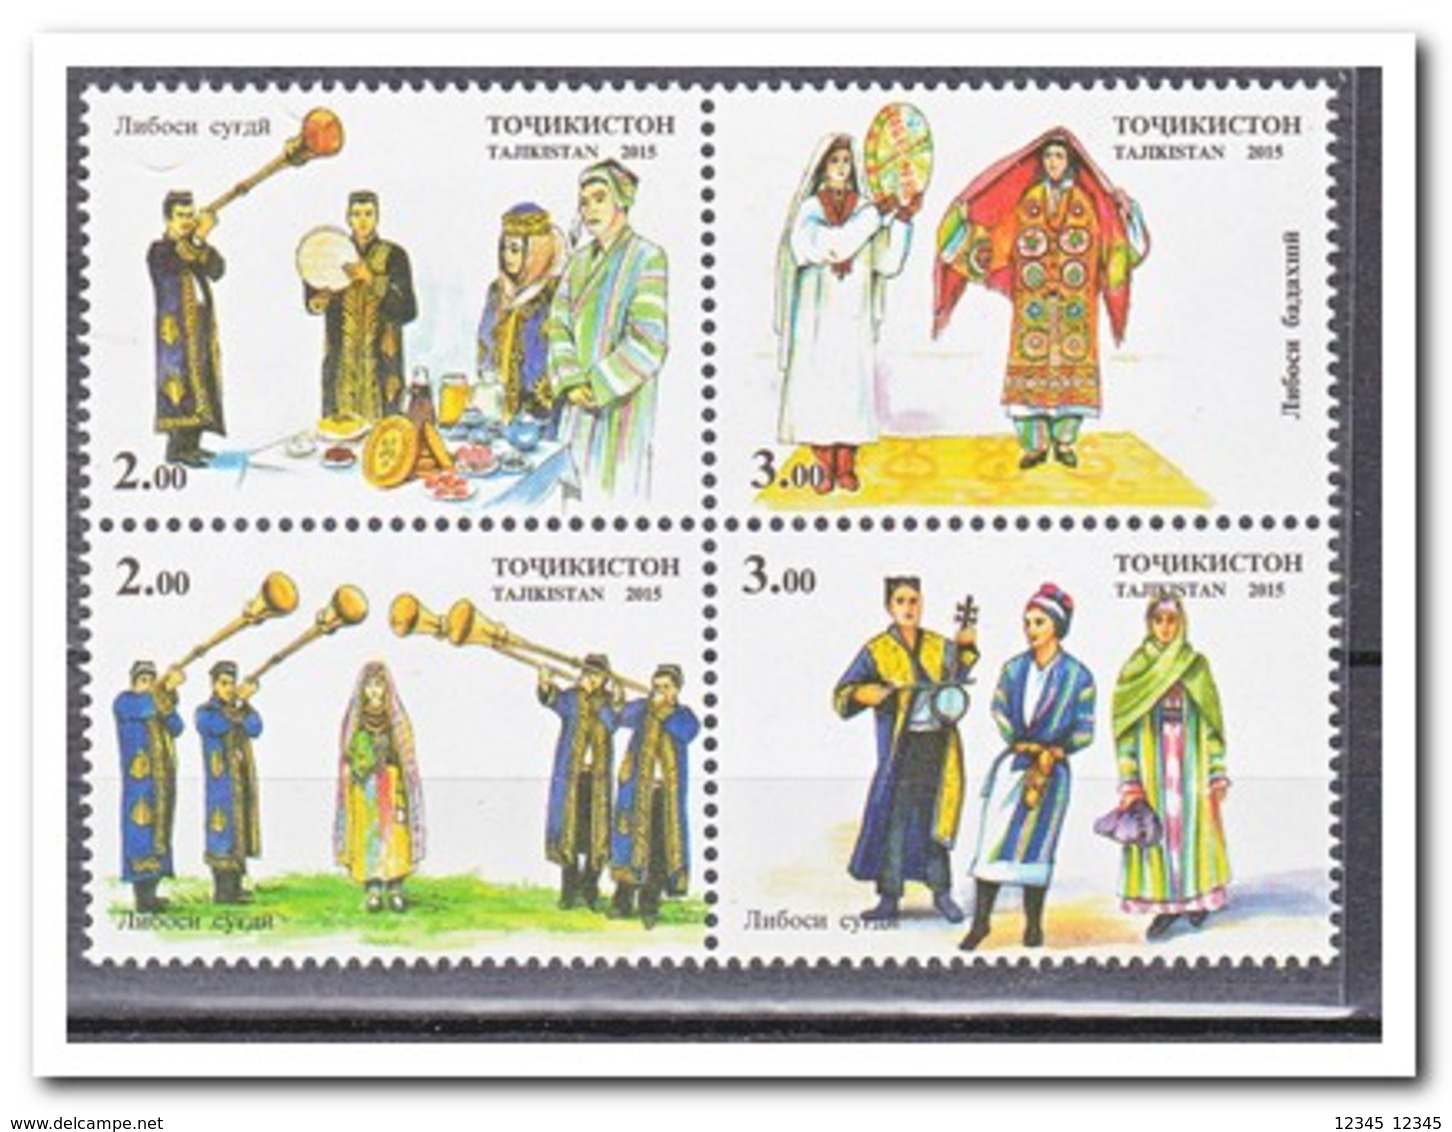 Tadzjikistan 2015, Postfris MNH, Music Instruments, Costums - Tadzjikistan